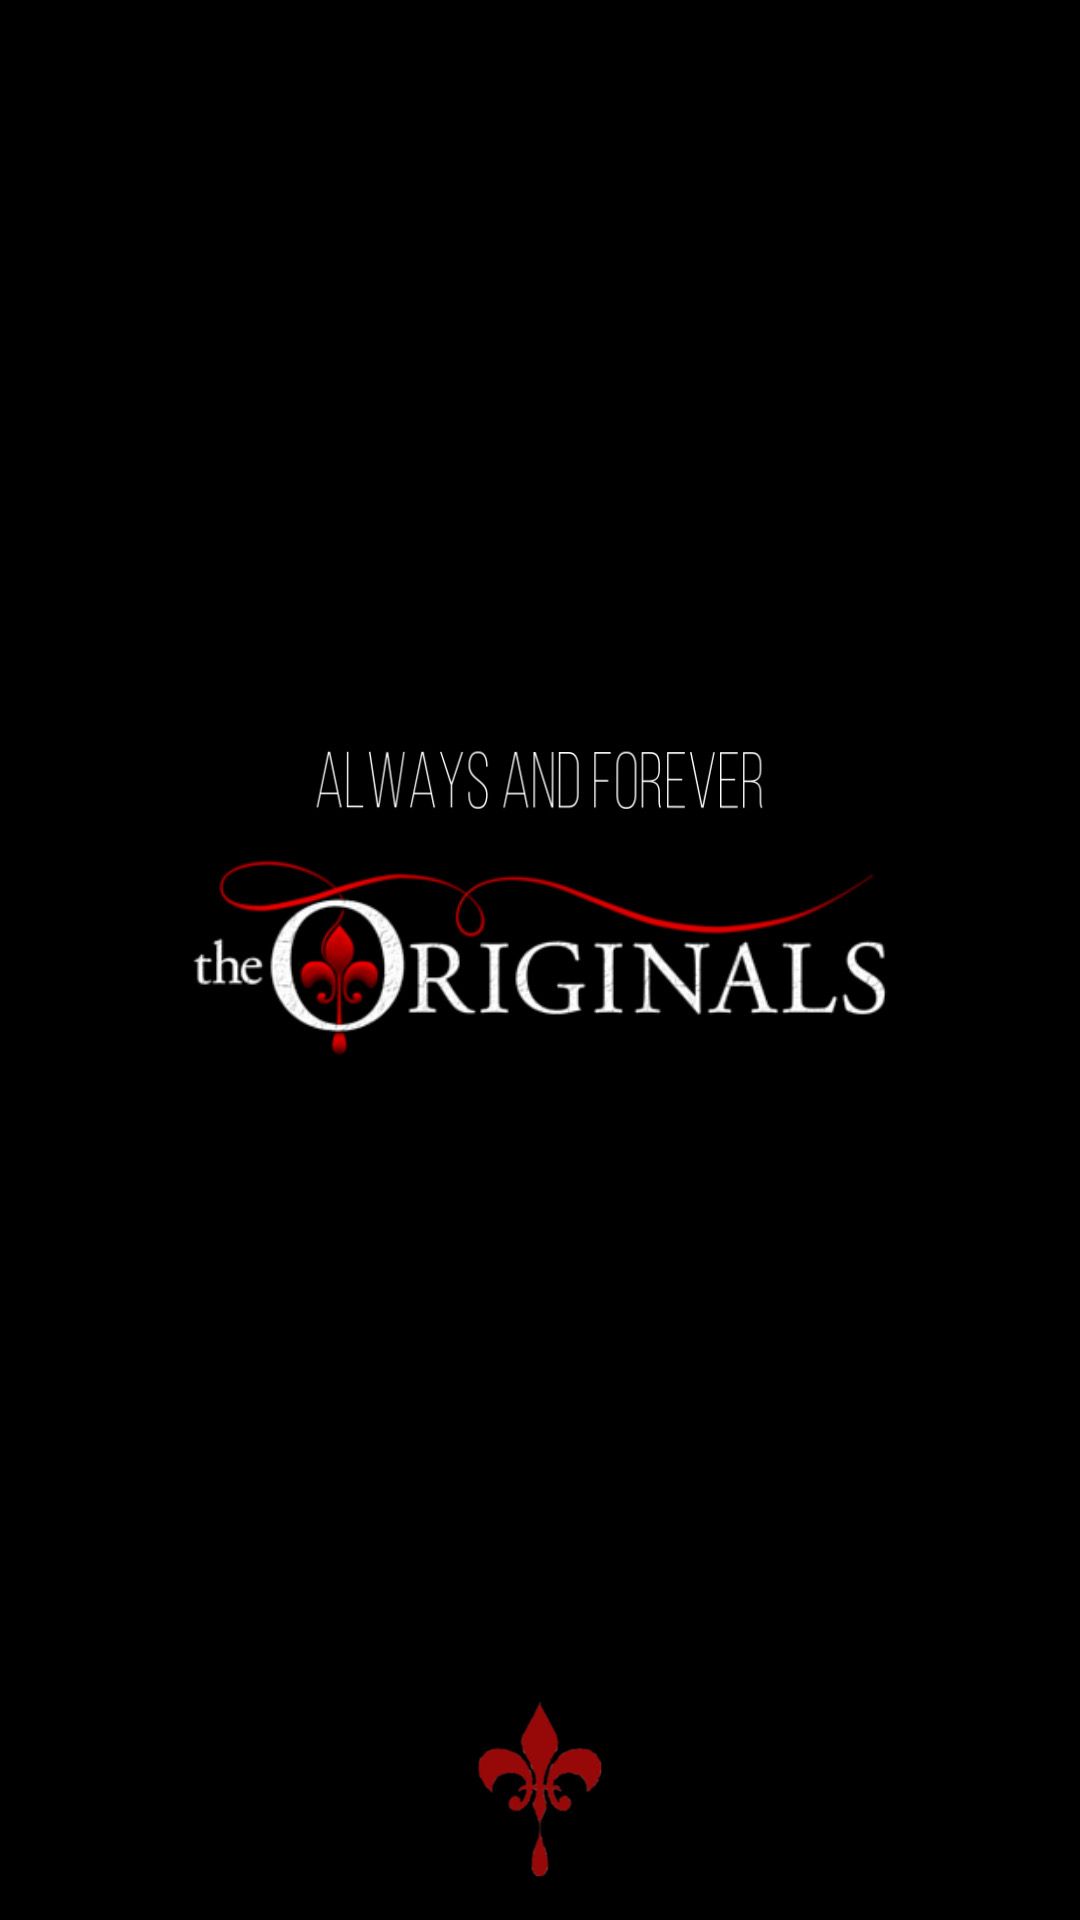 The Originals Always And Forever Vampire Diaries Logo